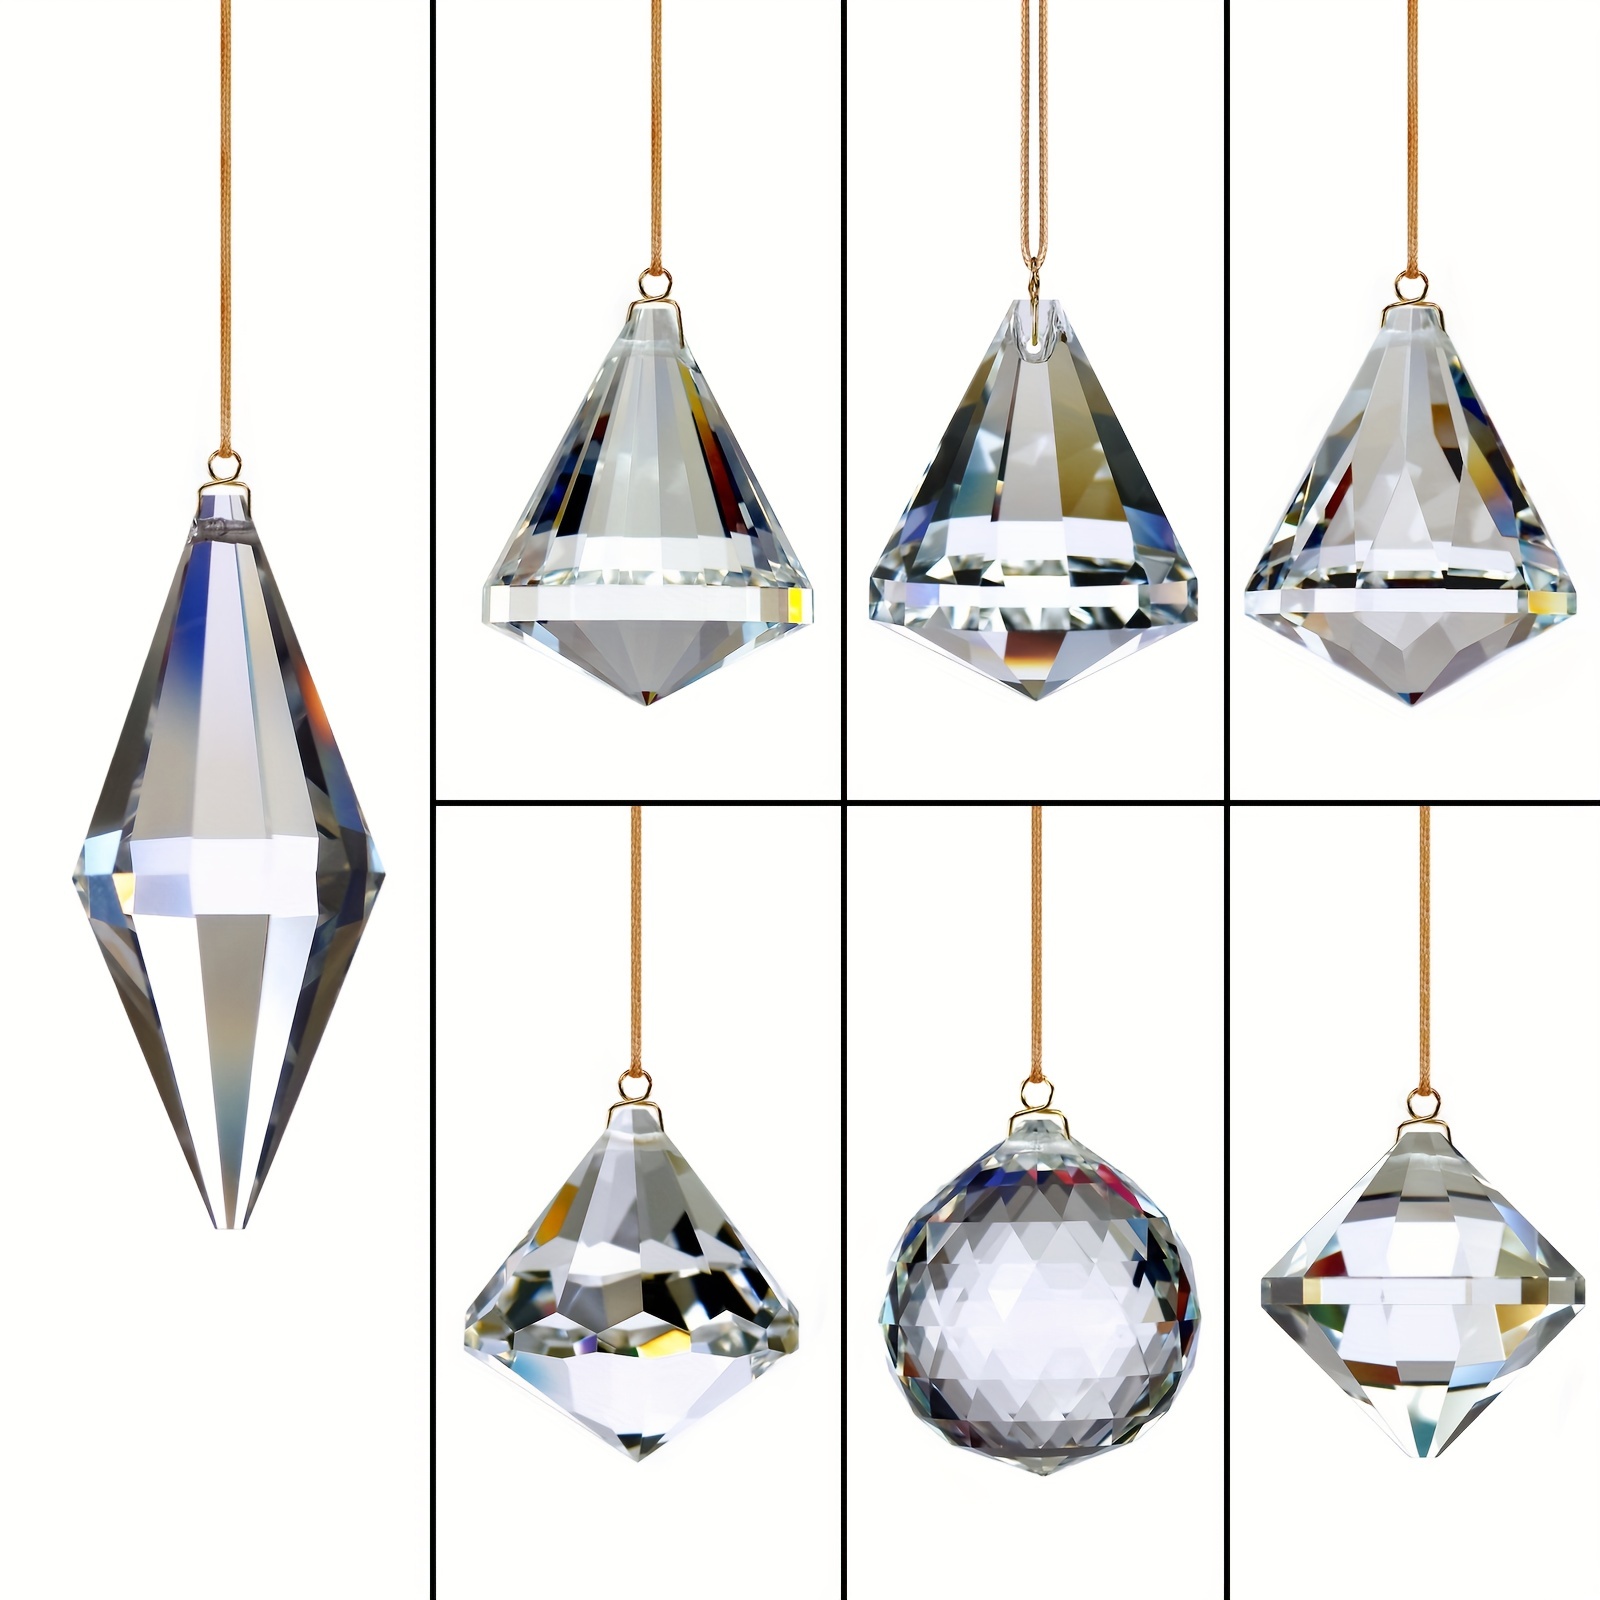 8pcs/set 20mm Chandelier Crystal Ball Suncatcher Rainbow Maker Glass Prism  Pendant Window Hanging Ornament Home Garden Decor - AliExpress